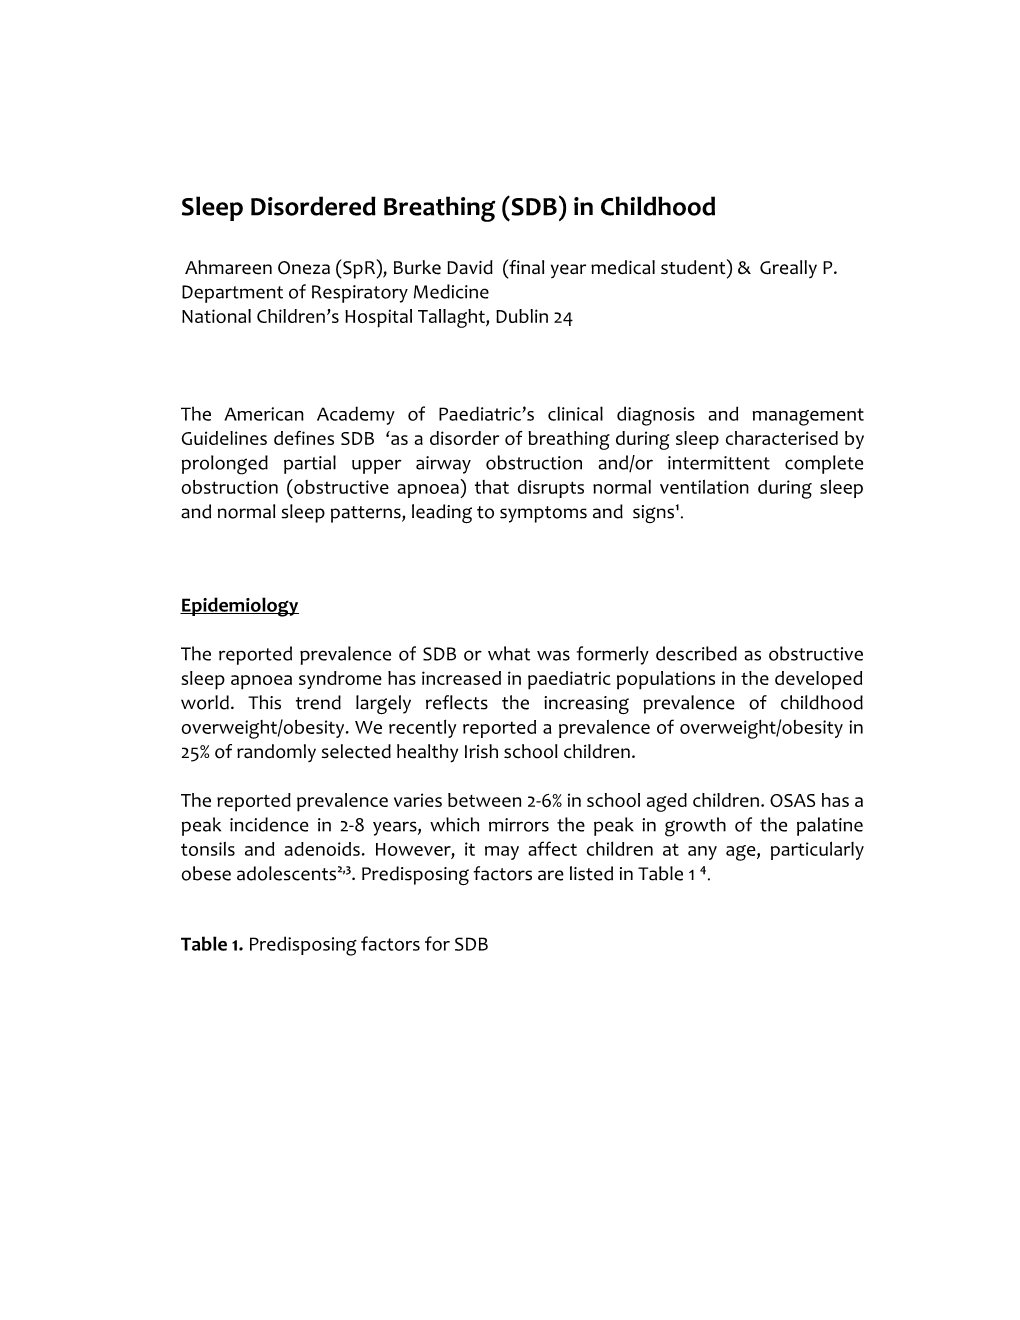 Childhood Obstructive Sleep Apnea Syndrome (OSAS)